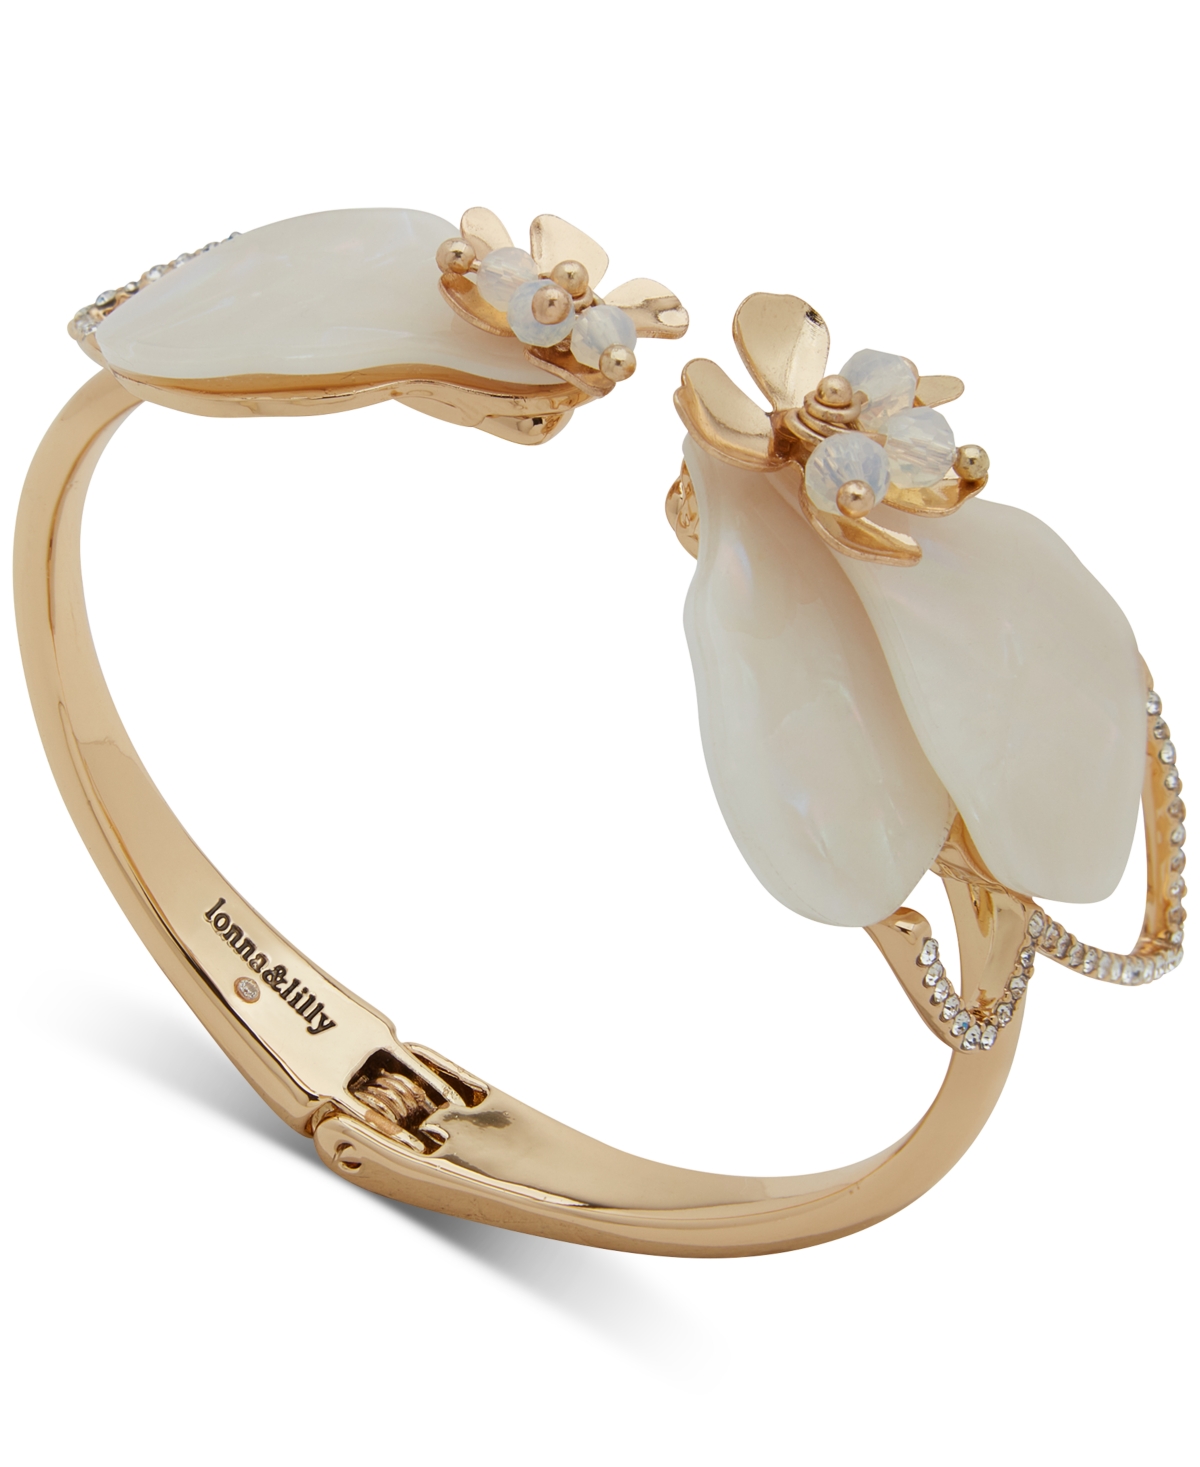 Gold-Tone Pave Flower Cuff Bracelet - White